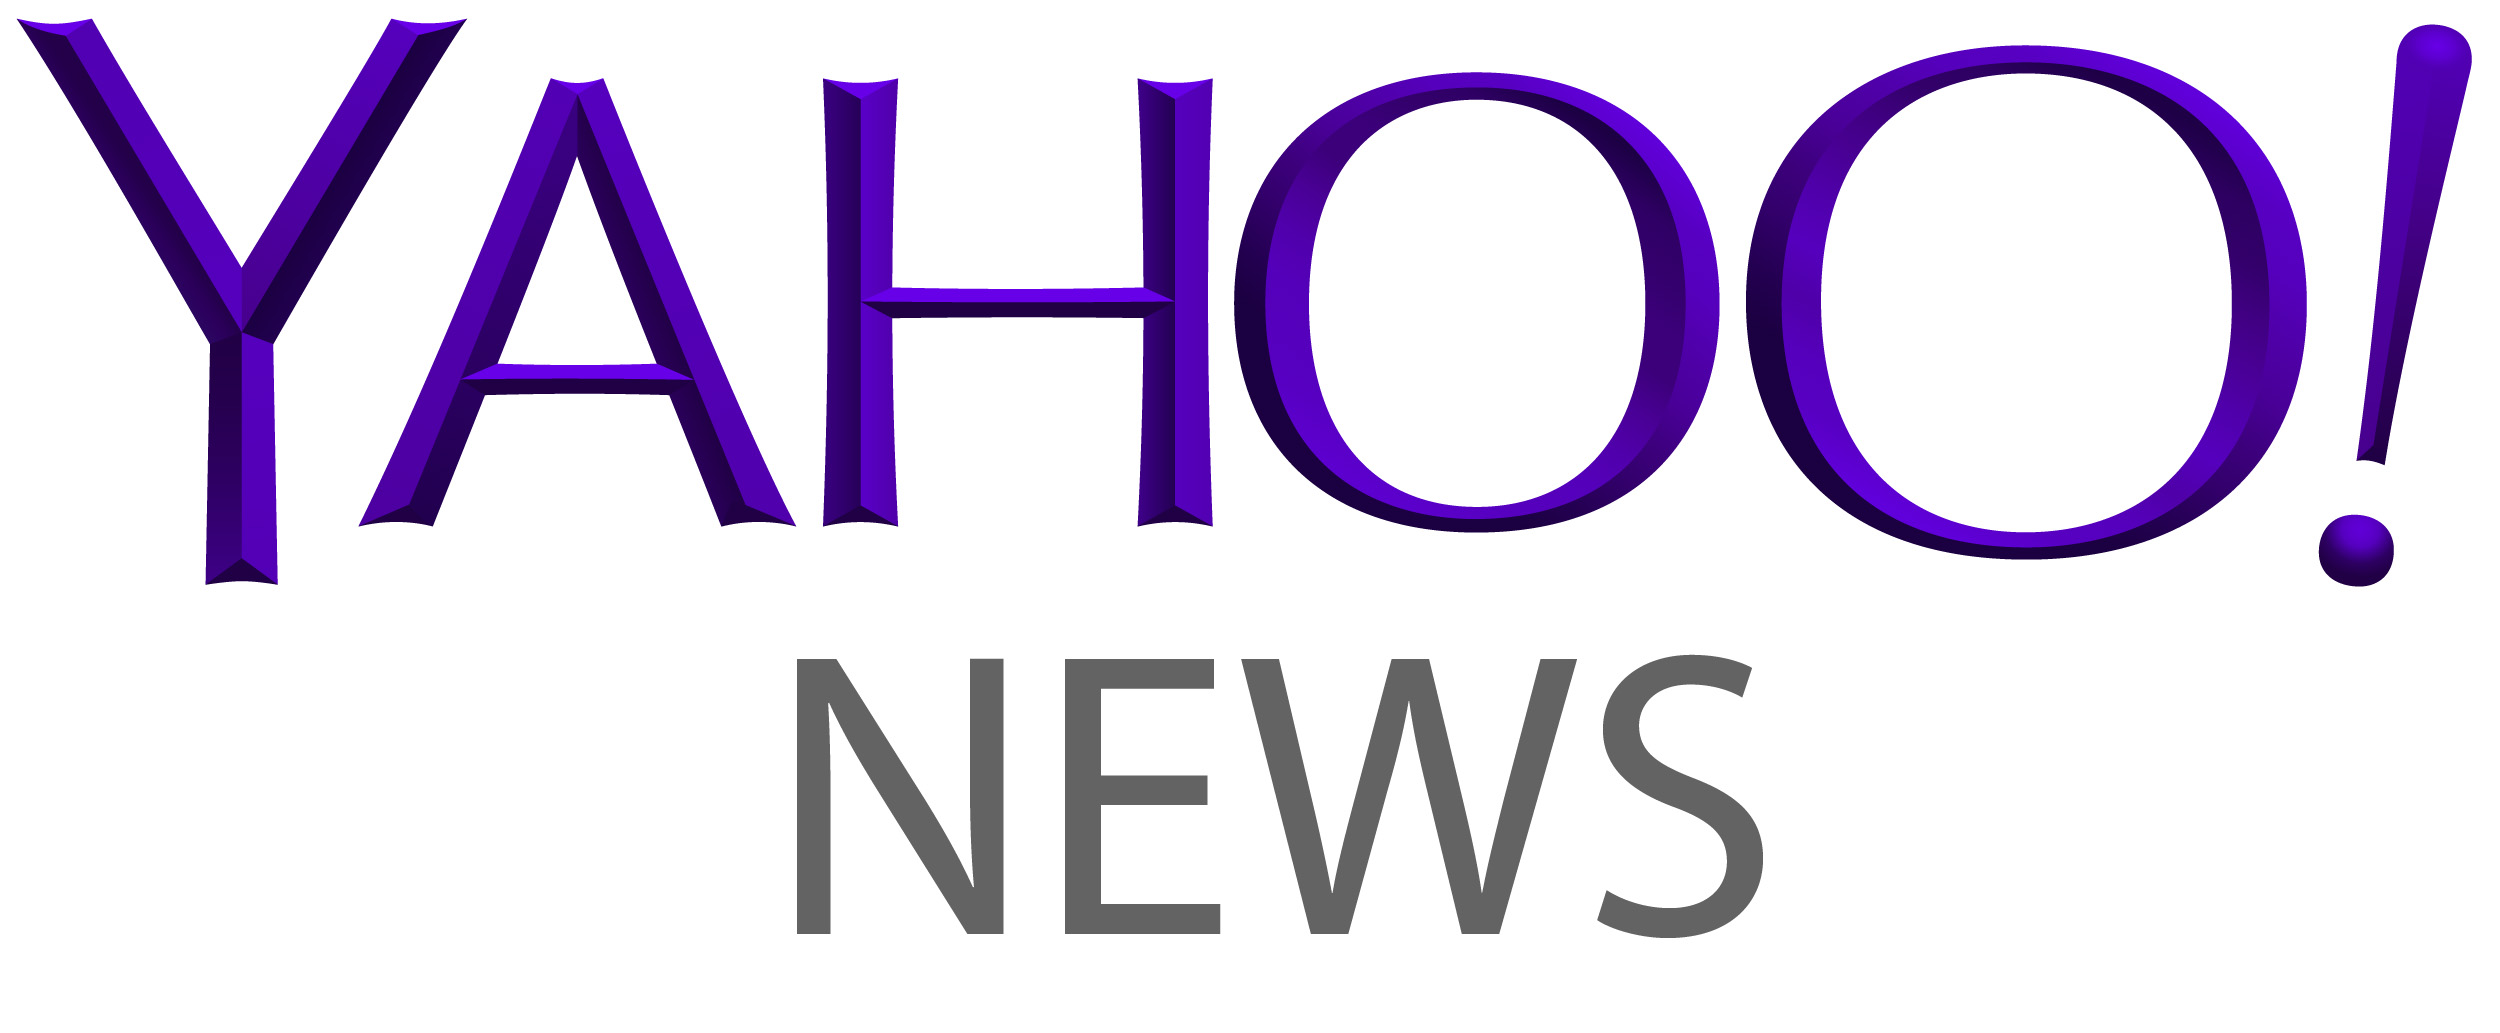 Yahoo-News-logo.jpg